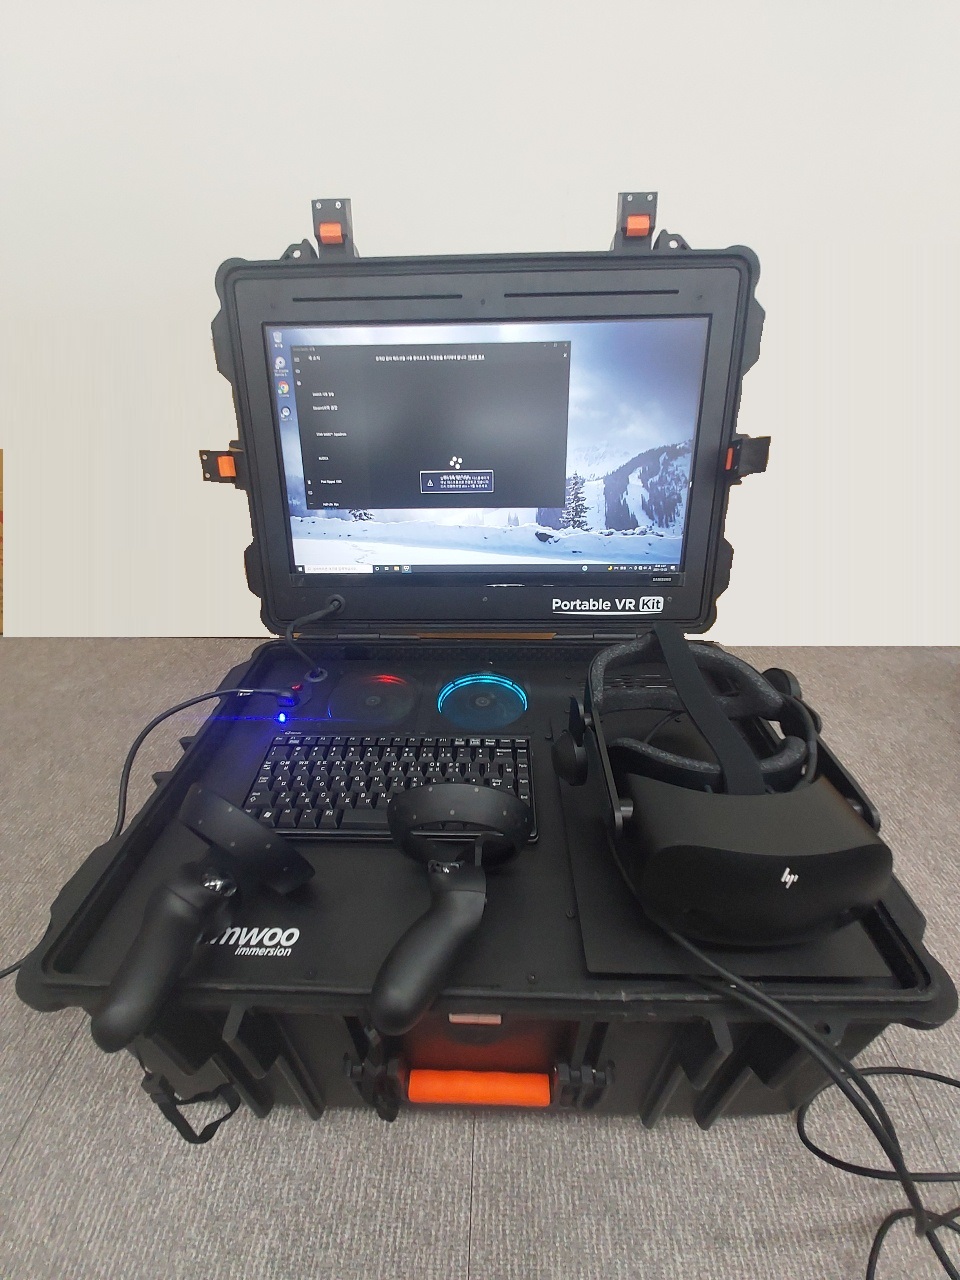 VR 실습체험장비 Portable VR KIT